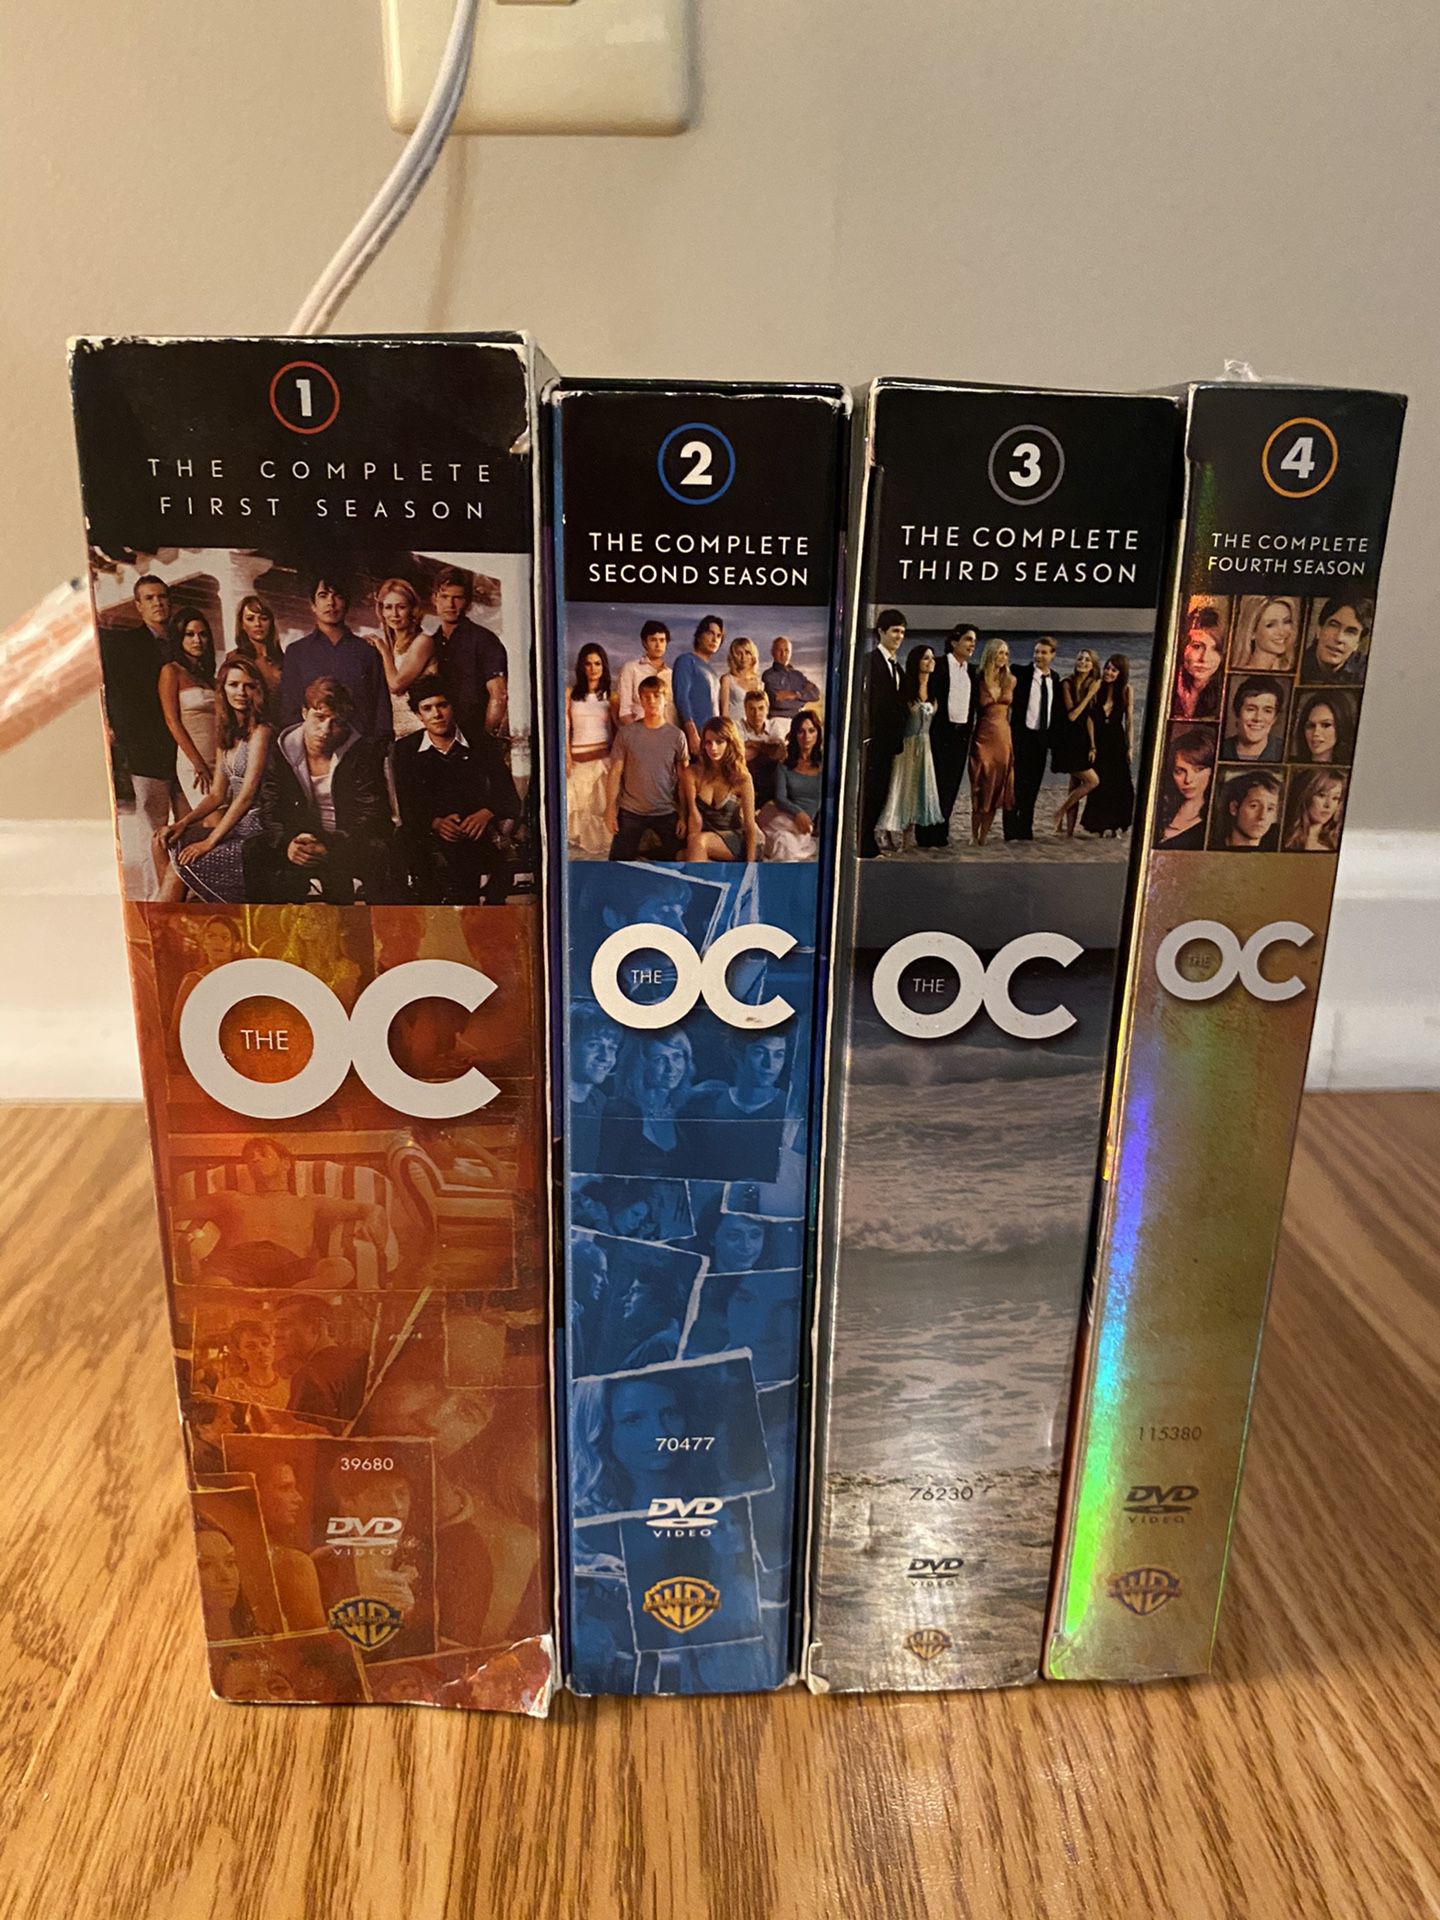 The OC Complete Series (4 seasons)